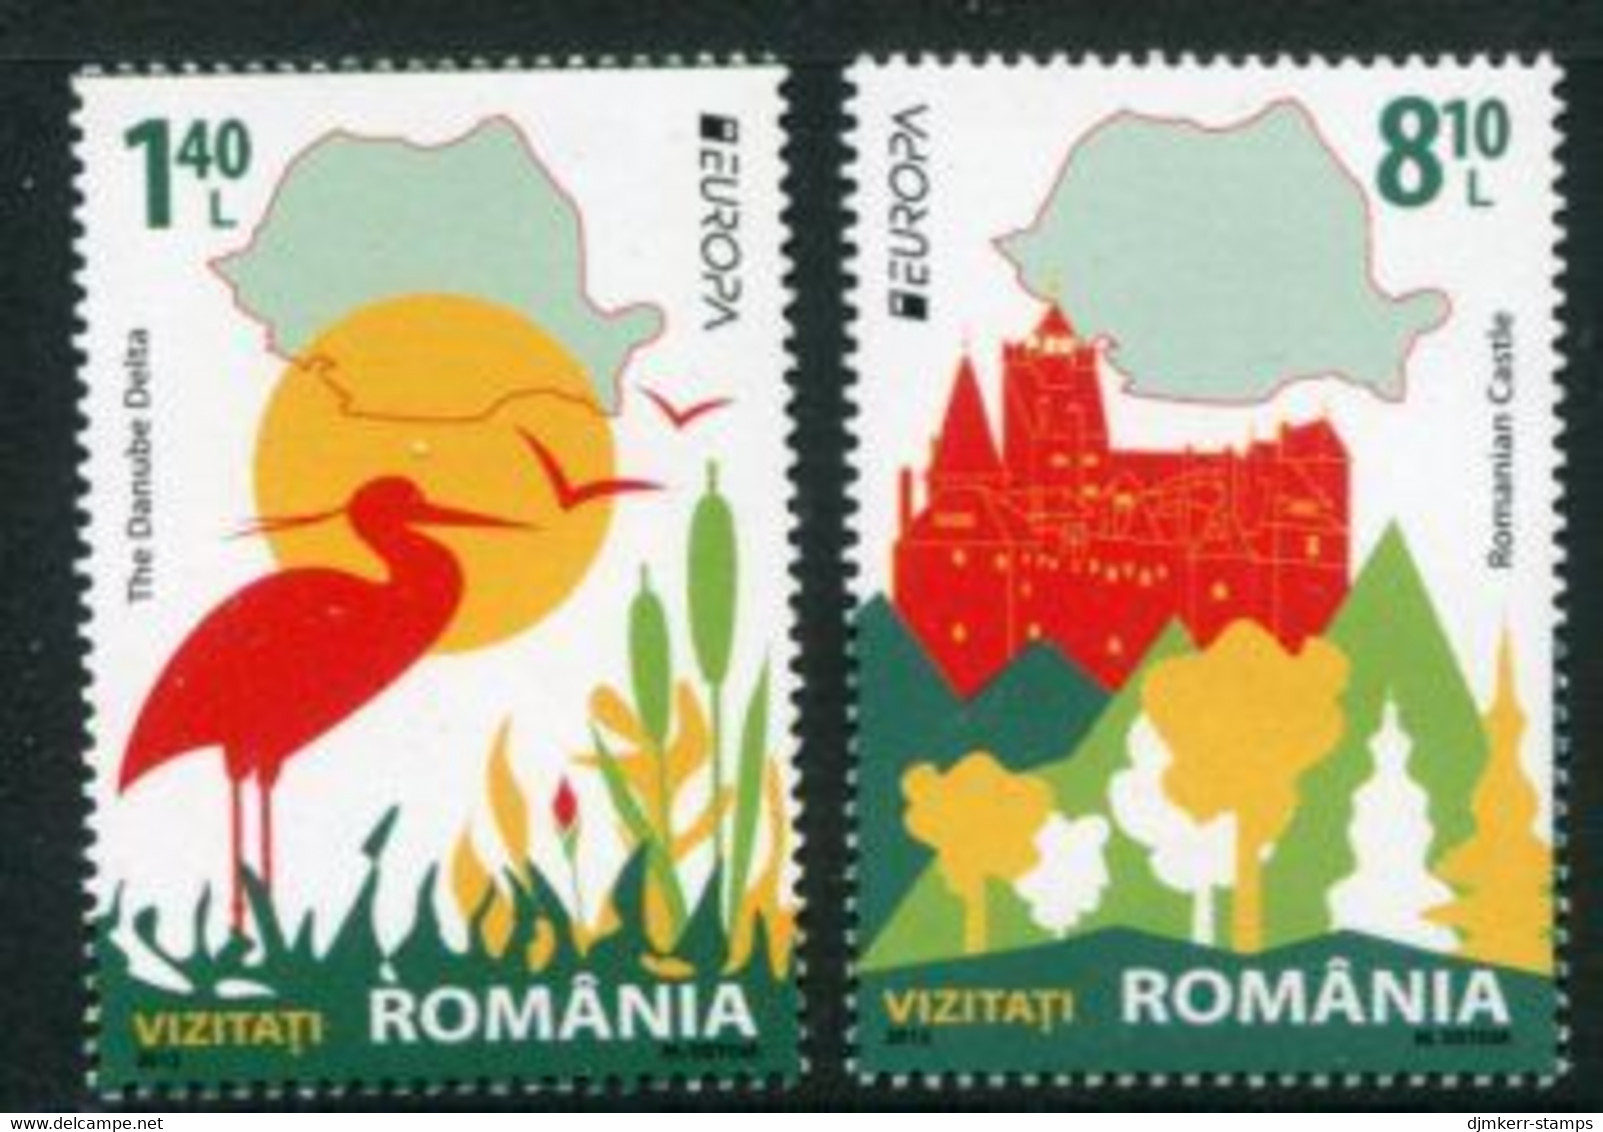 ROMANIA 2012 Europa: Tourism  MNH / **.  Michel 6617-18 - Ongebruikt